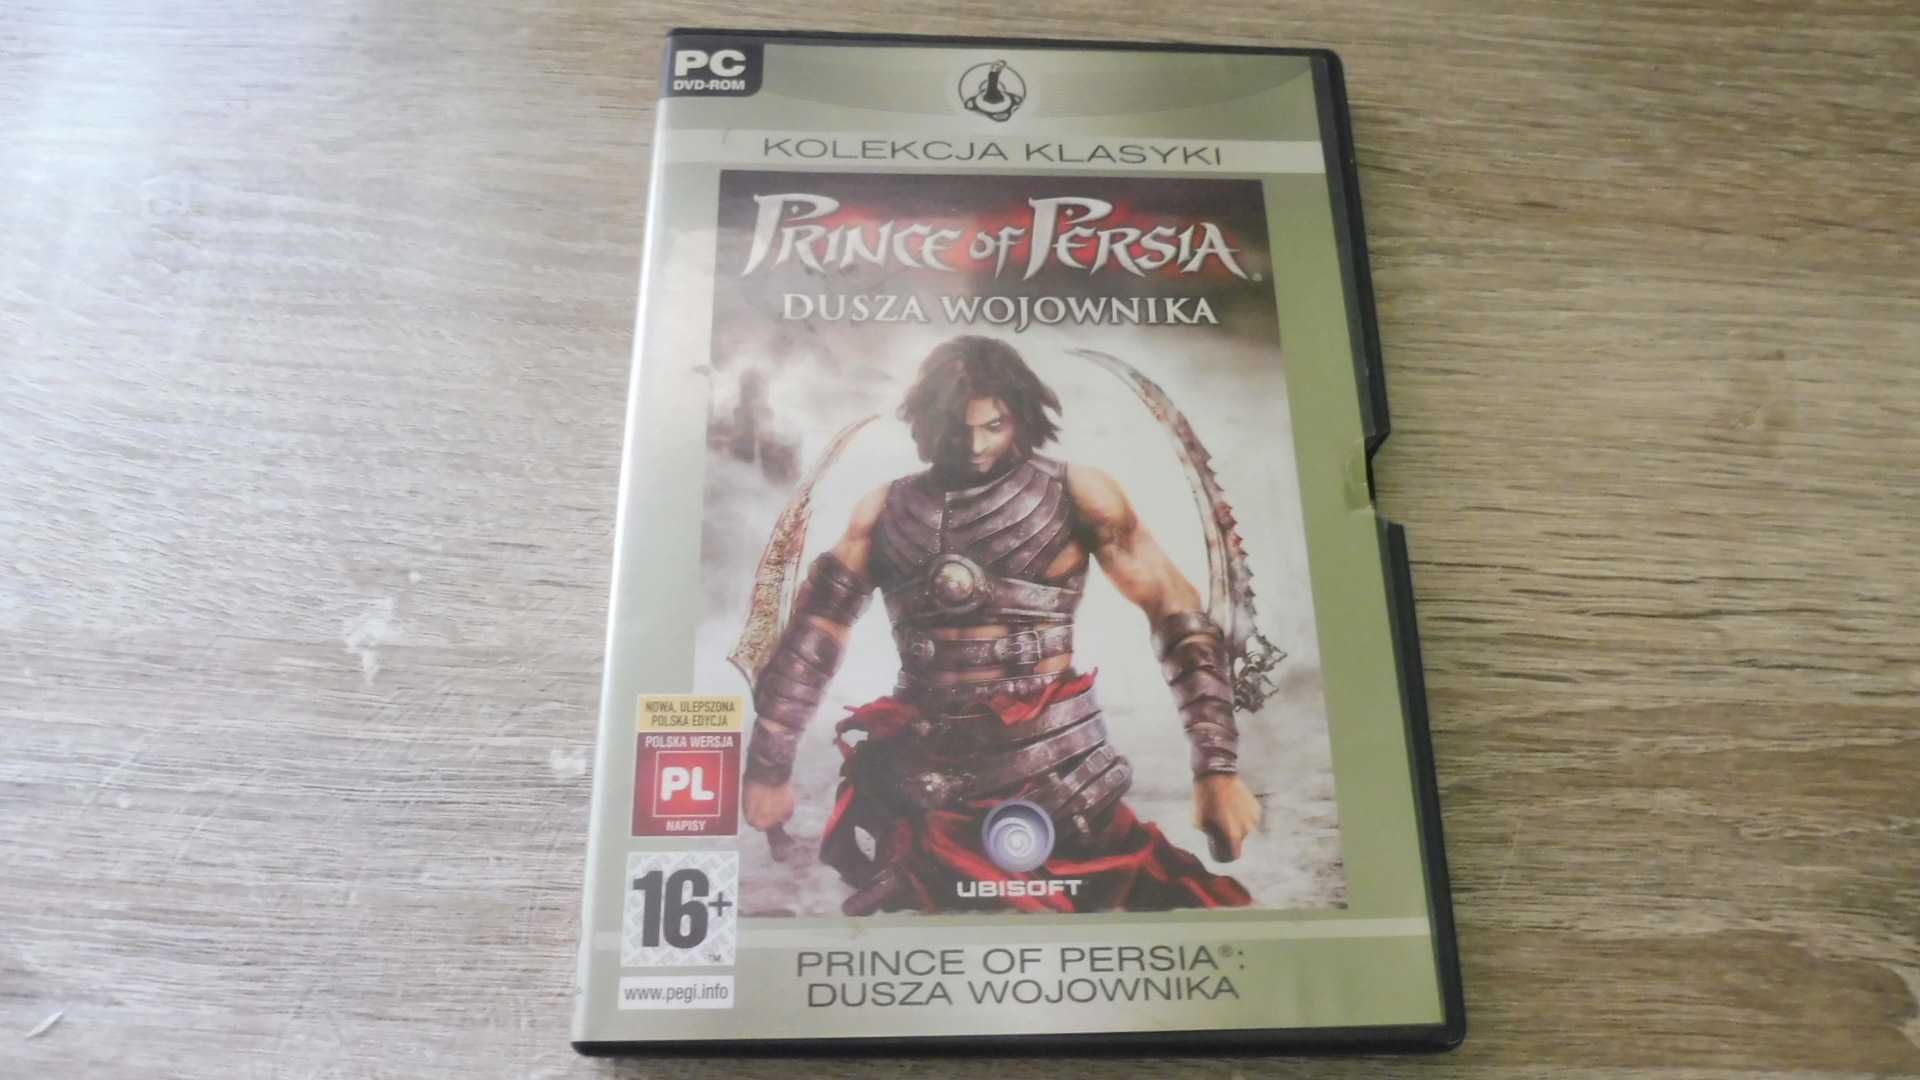 Prince of Persia - Dusza wojownika - Kolekcja klasyki - PC - PL